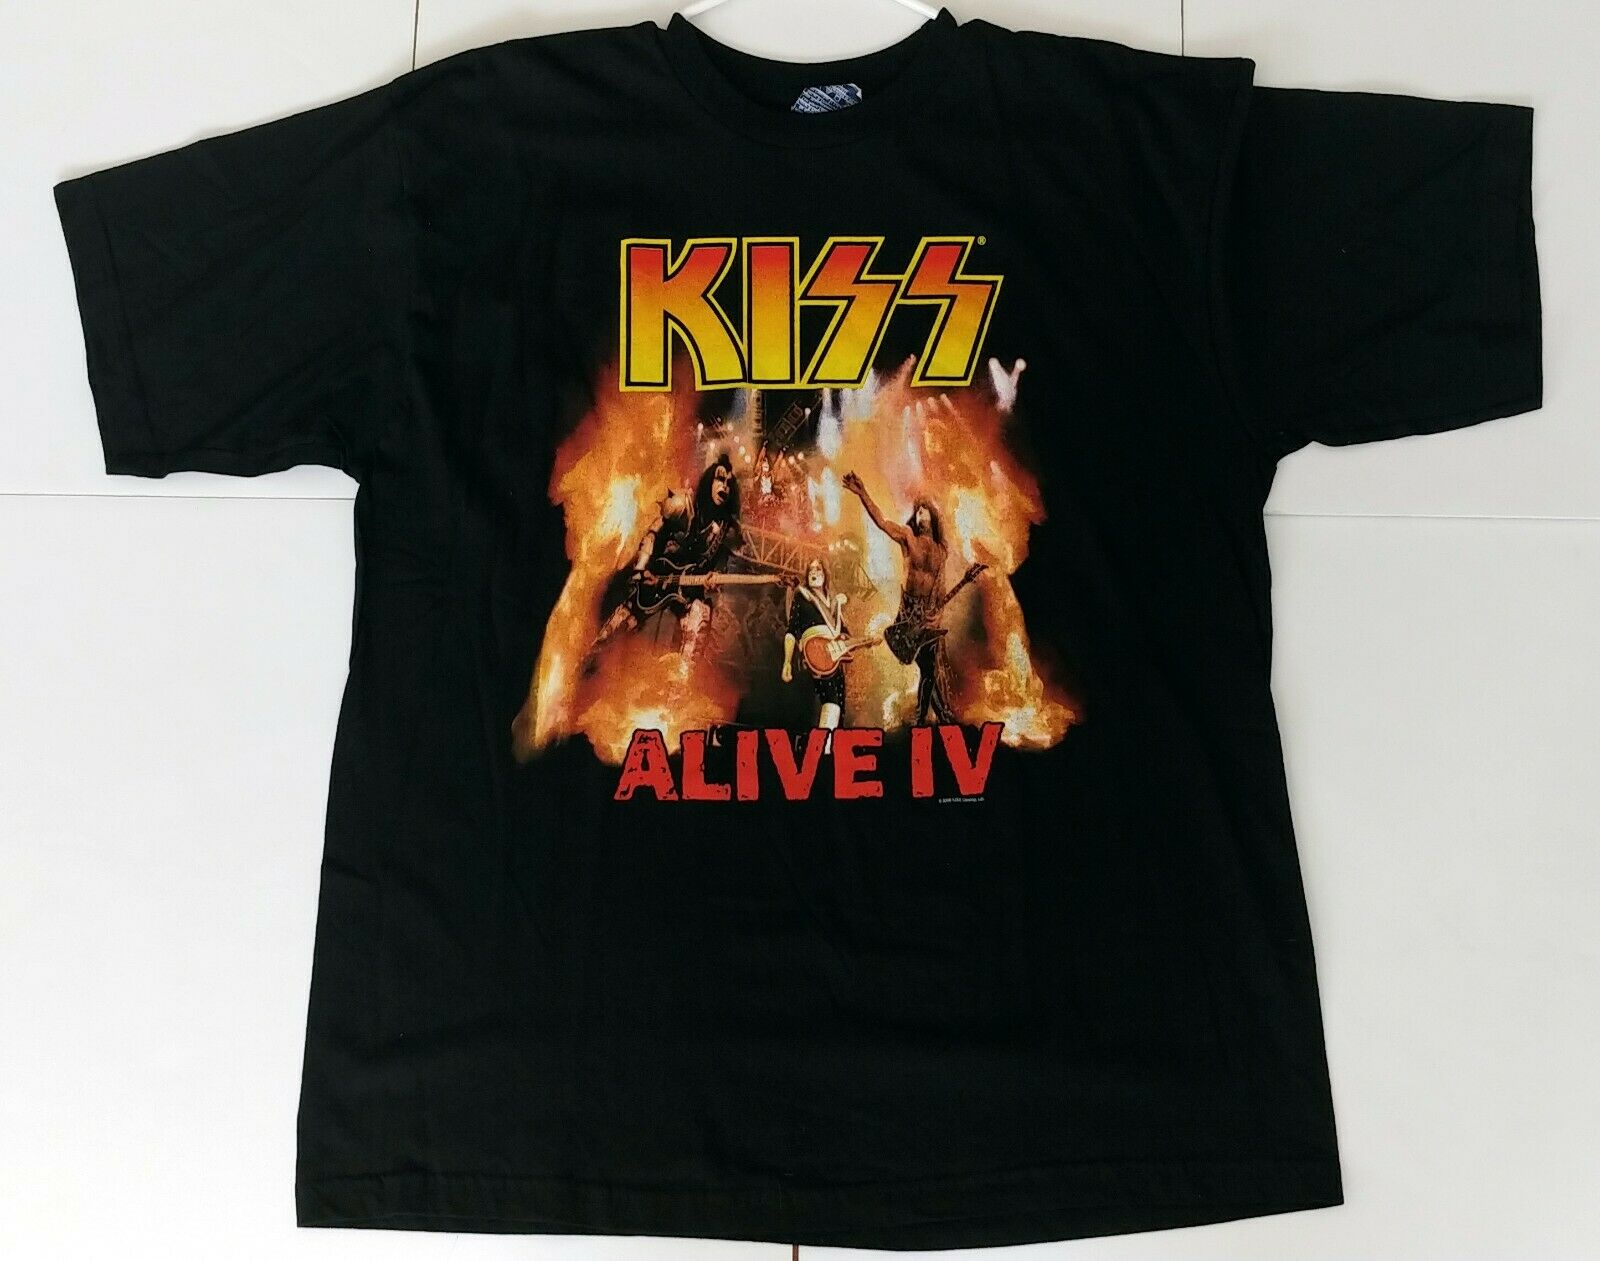 Vintage Kiss Band Concert T-shirt Alive Iv Farewell Tour 2000 Shirt Unworn